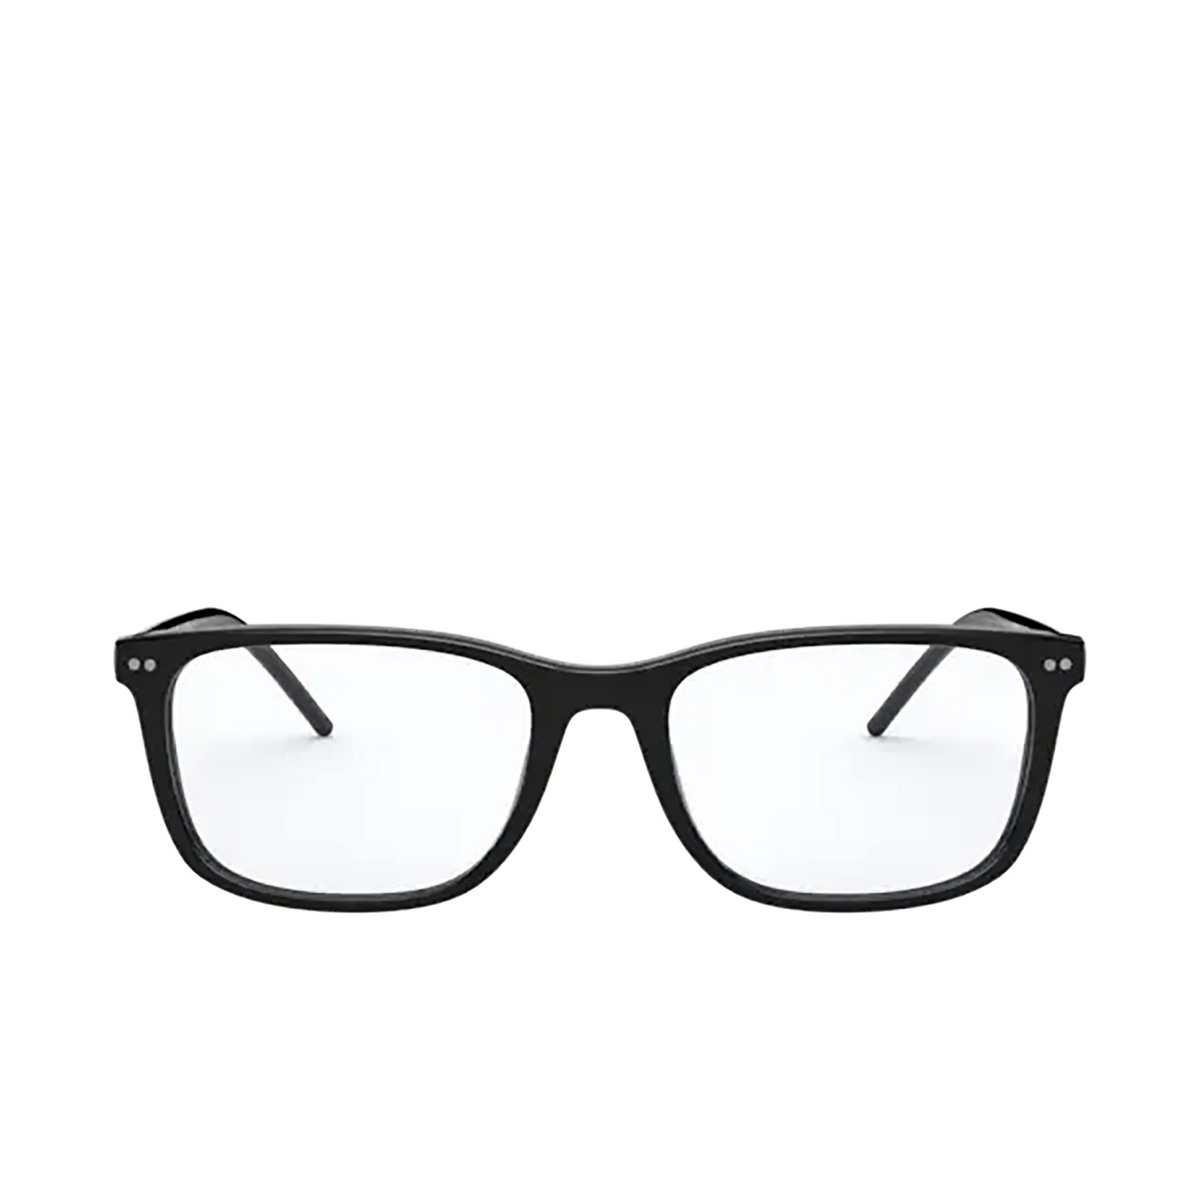 Polo Ralph Lauren® Square Eyeglasses: PH2224 color Shiny Black 5001 - front view.